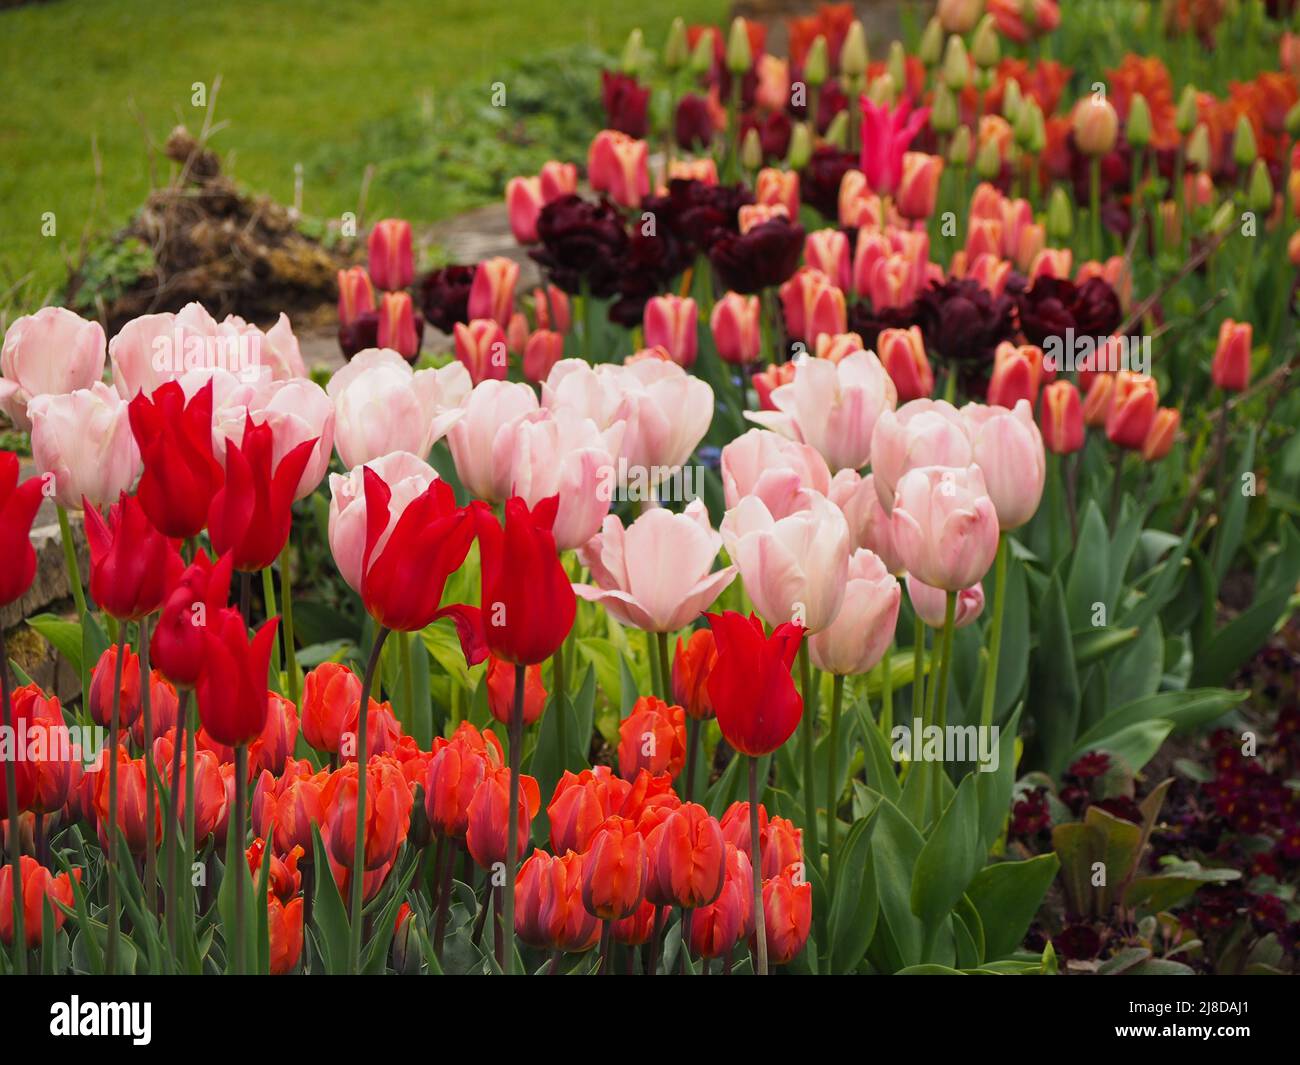 Chenies Manor Garden. Tulips en masse in the Sunken garden; red, pink, orange tones. Tulipa 'Hermitage', Tulipa 'Salmon Prince', Tulipa 'Request'. Stock Photo